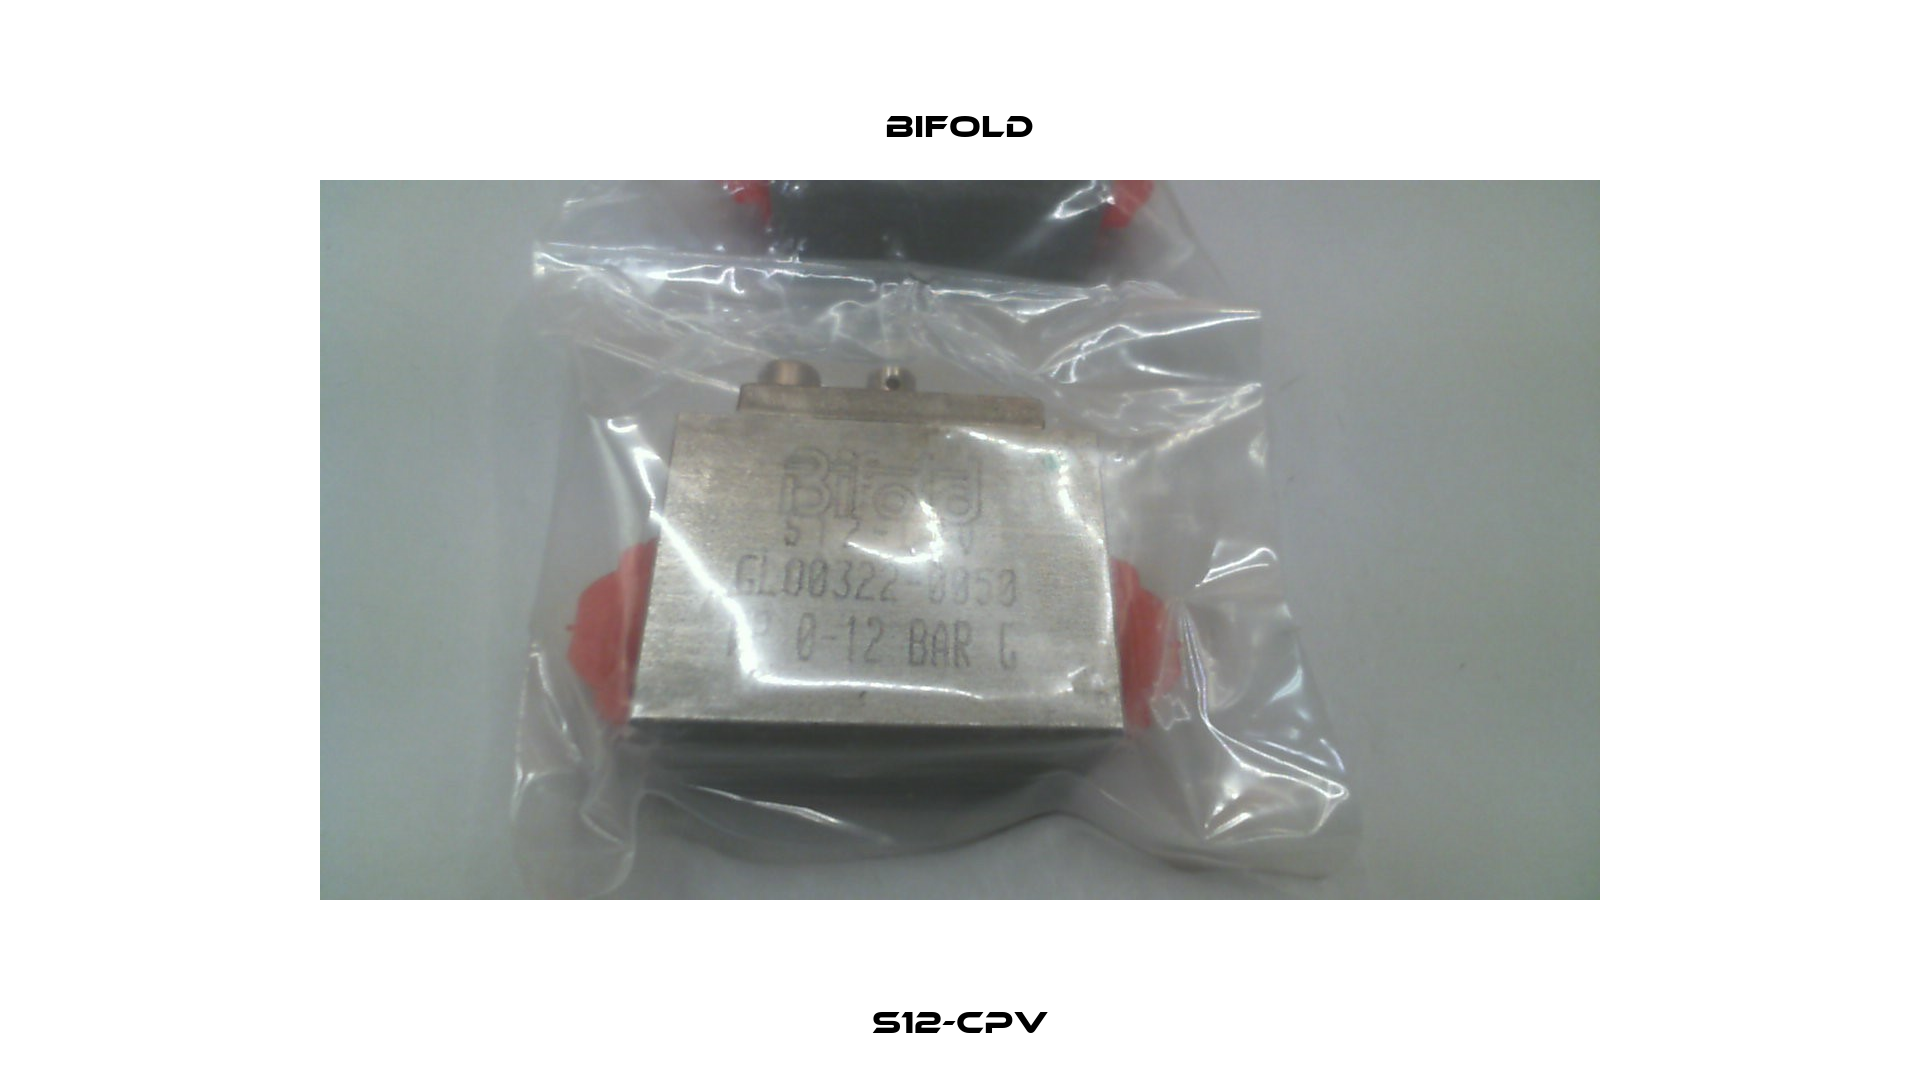 S12-CPV Bifold